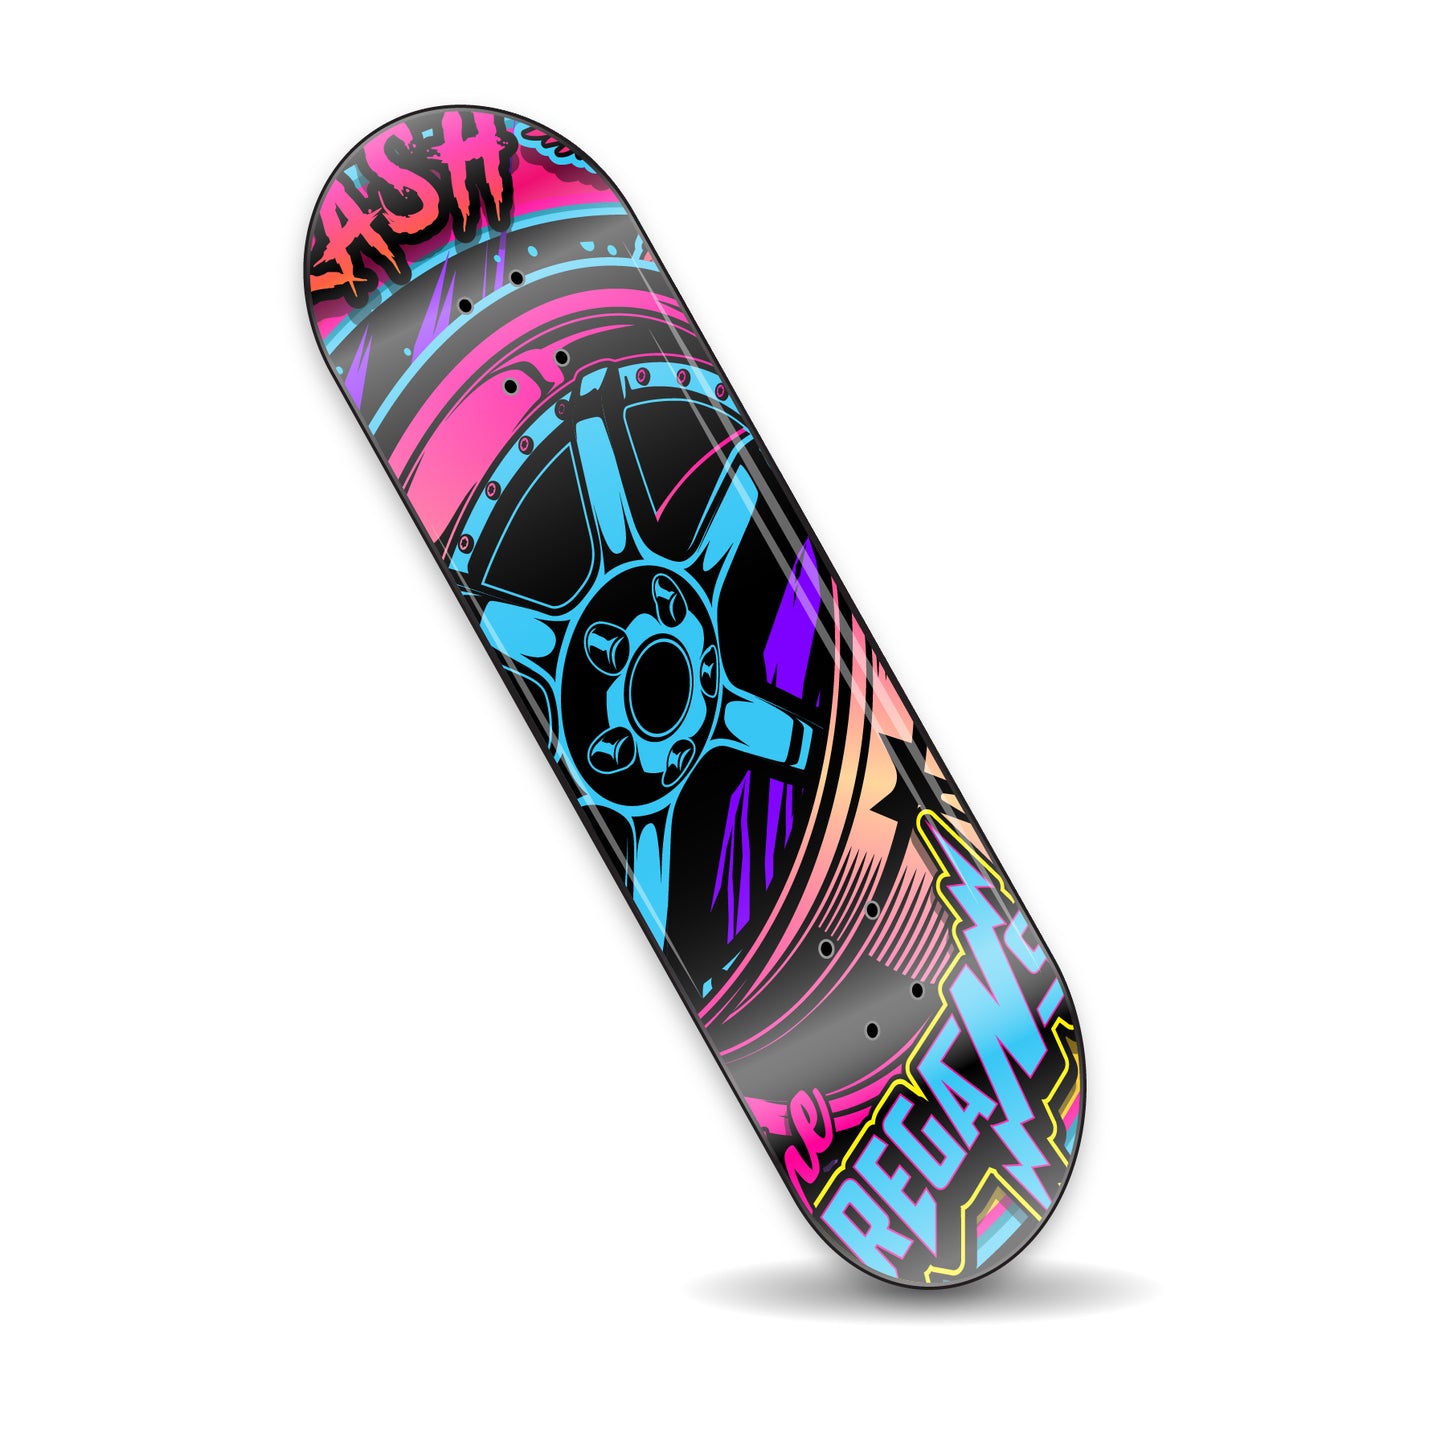 Sticker Phantom, skate deck, skateboard, custom skateboard, custom deck, skateboard print, reganstein, vinyl sticker, wheel, retro style